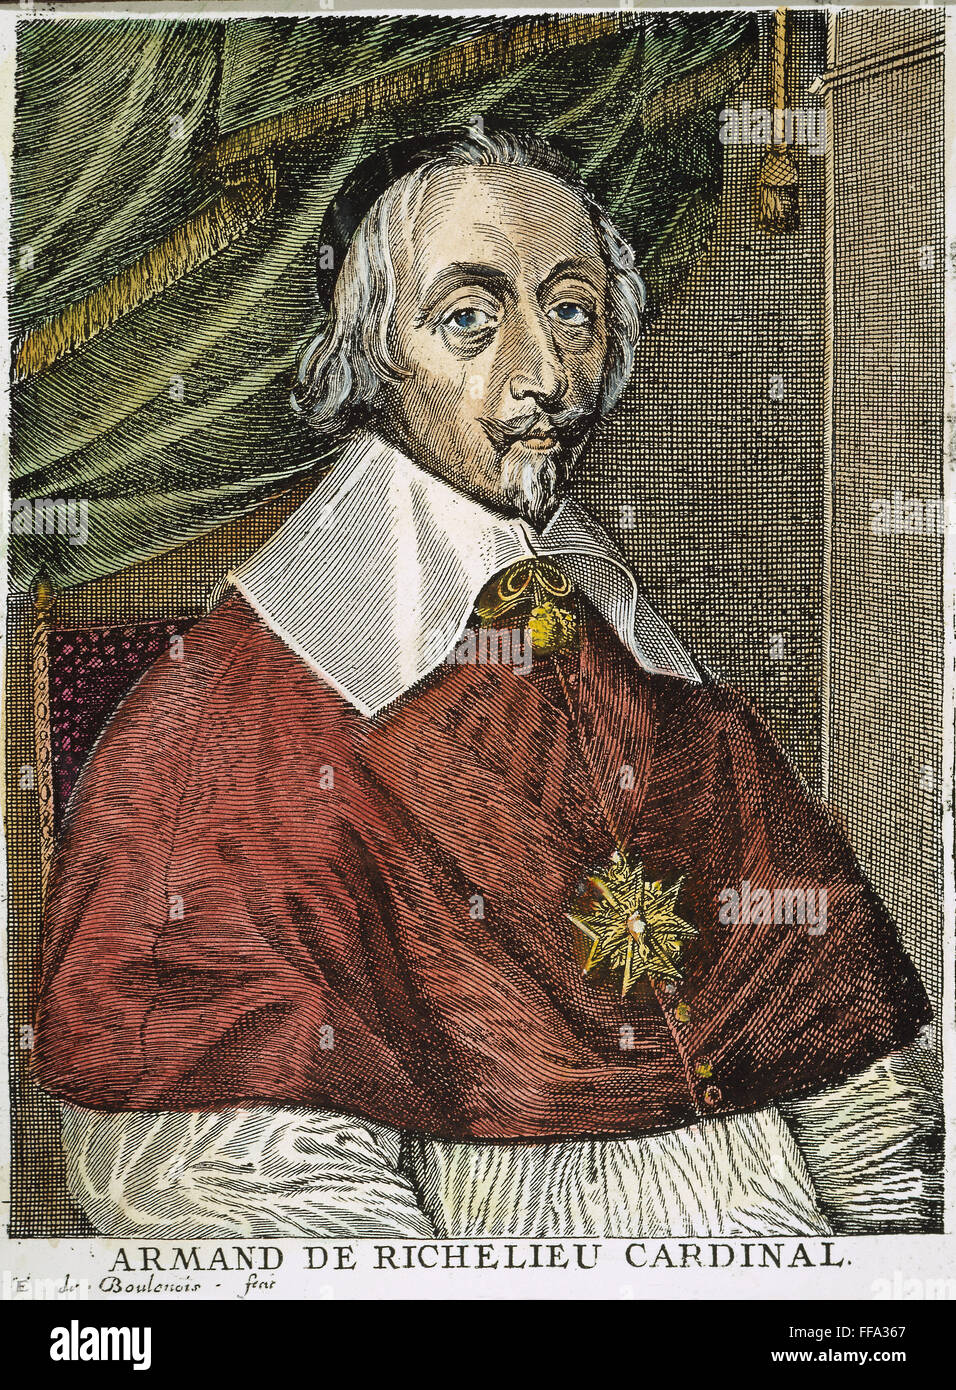 Il cardinale Richelieu /n(1585-1642). Armand-Jean du Plessis, Duc de Richelieu. Il cardinale francese e più. Incisione su rame, fiammingo, tardo XVII secolo, da Edme de Boulonois. Foto Stock